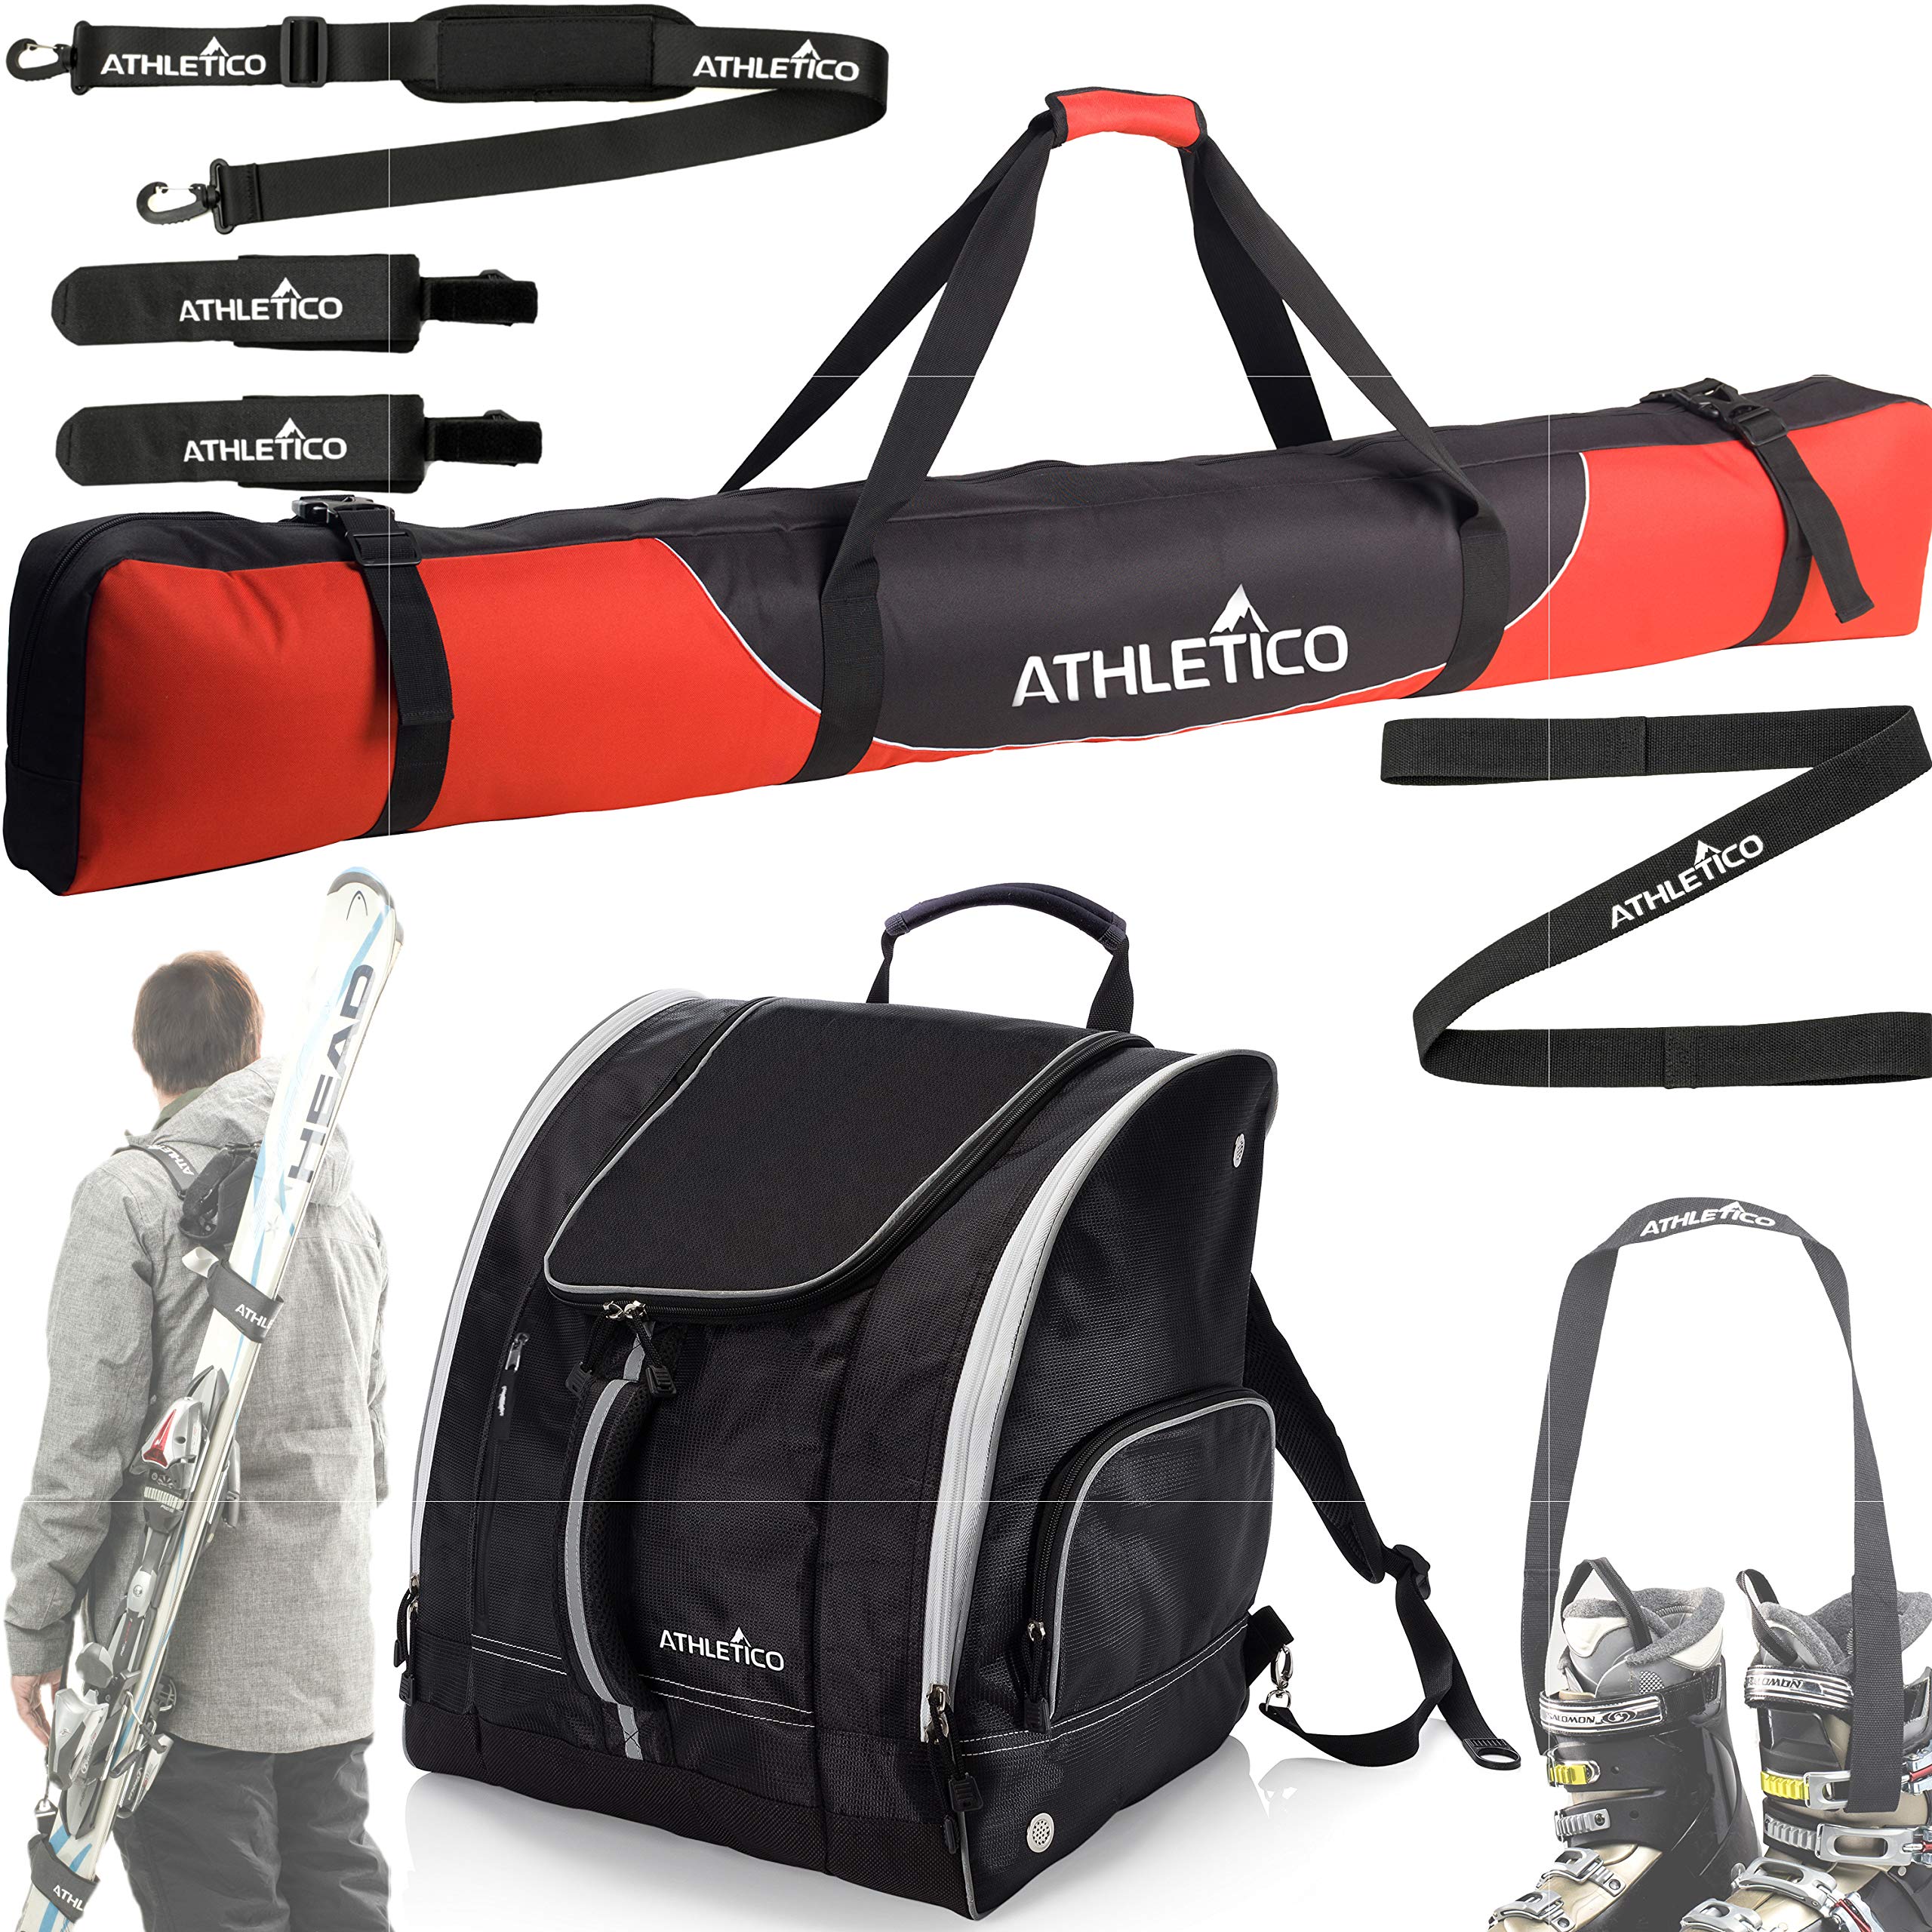 Athletico Mogul Padded Ski Bag Bundle - Ski Bag + Ski Boot Bag + Ski Boot Strap + Ski Carrier  - Like New